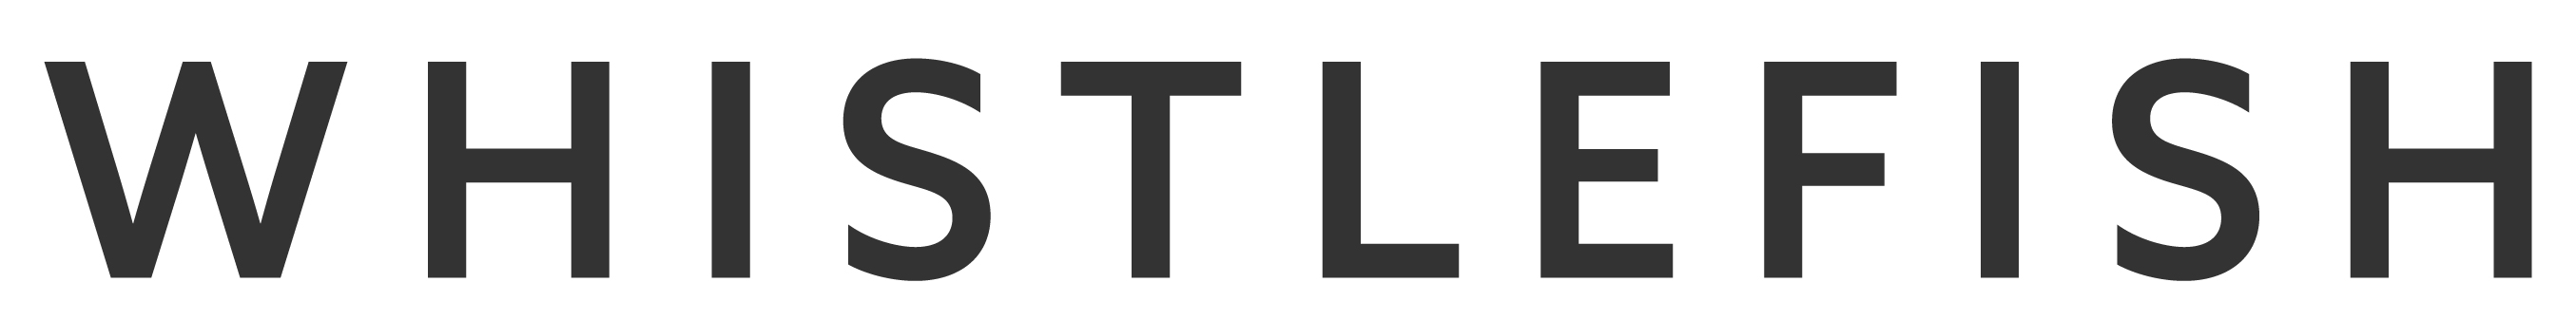 Whistlefish_logo